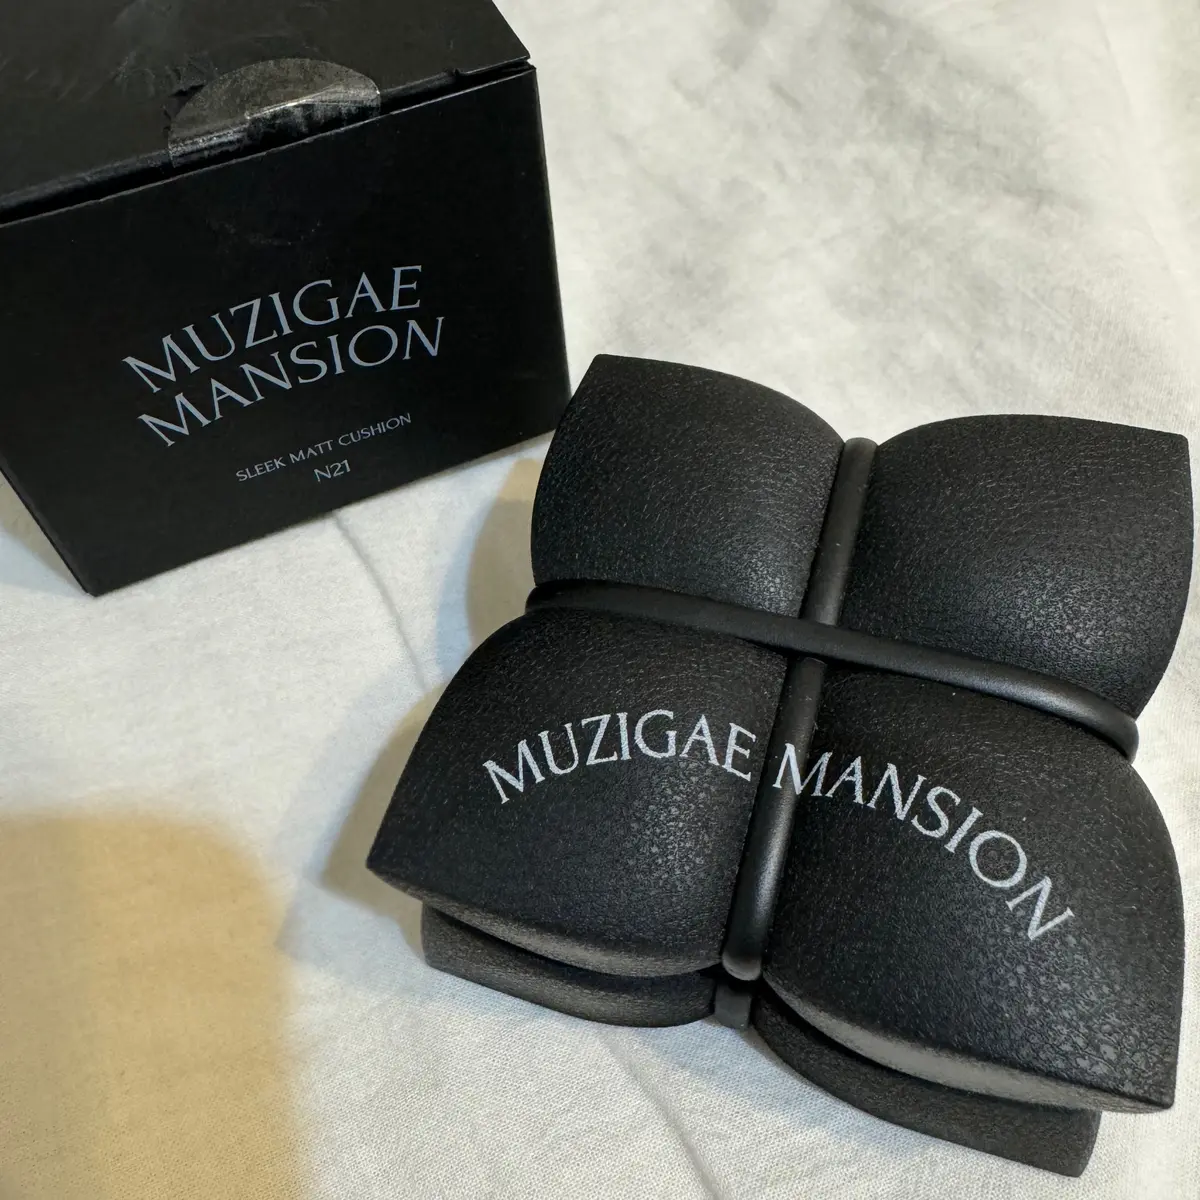 MUZIGAE MANSION(ムジゲマンション) SLEEK MATT CUSHION  スリークマットクッション リフィル付き 